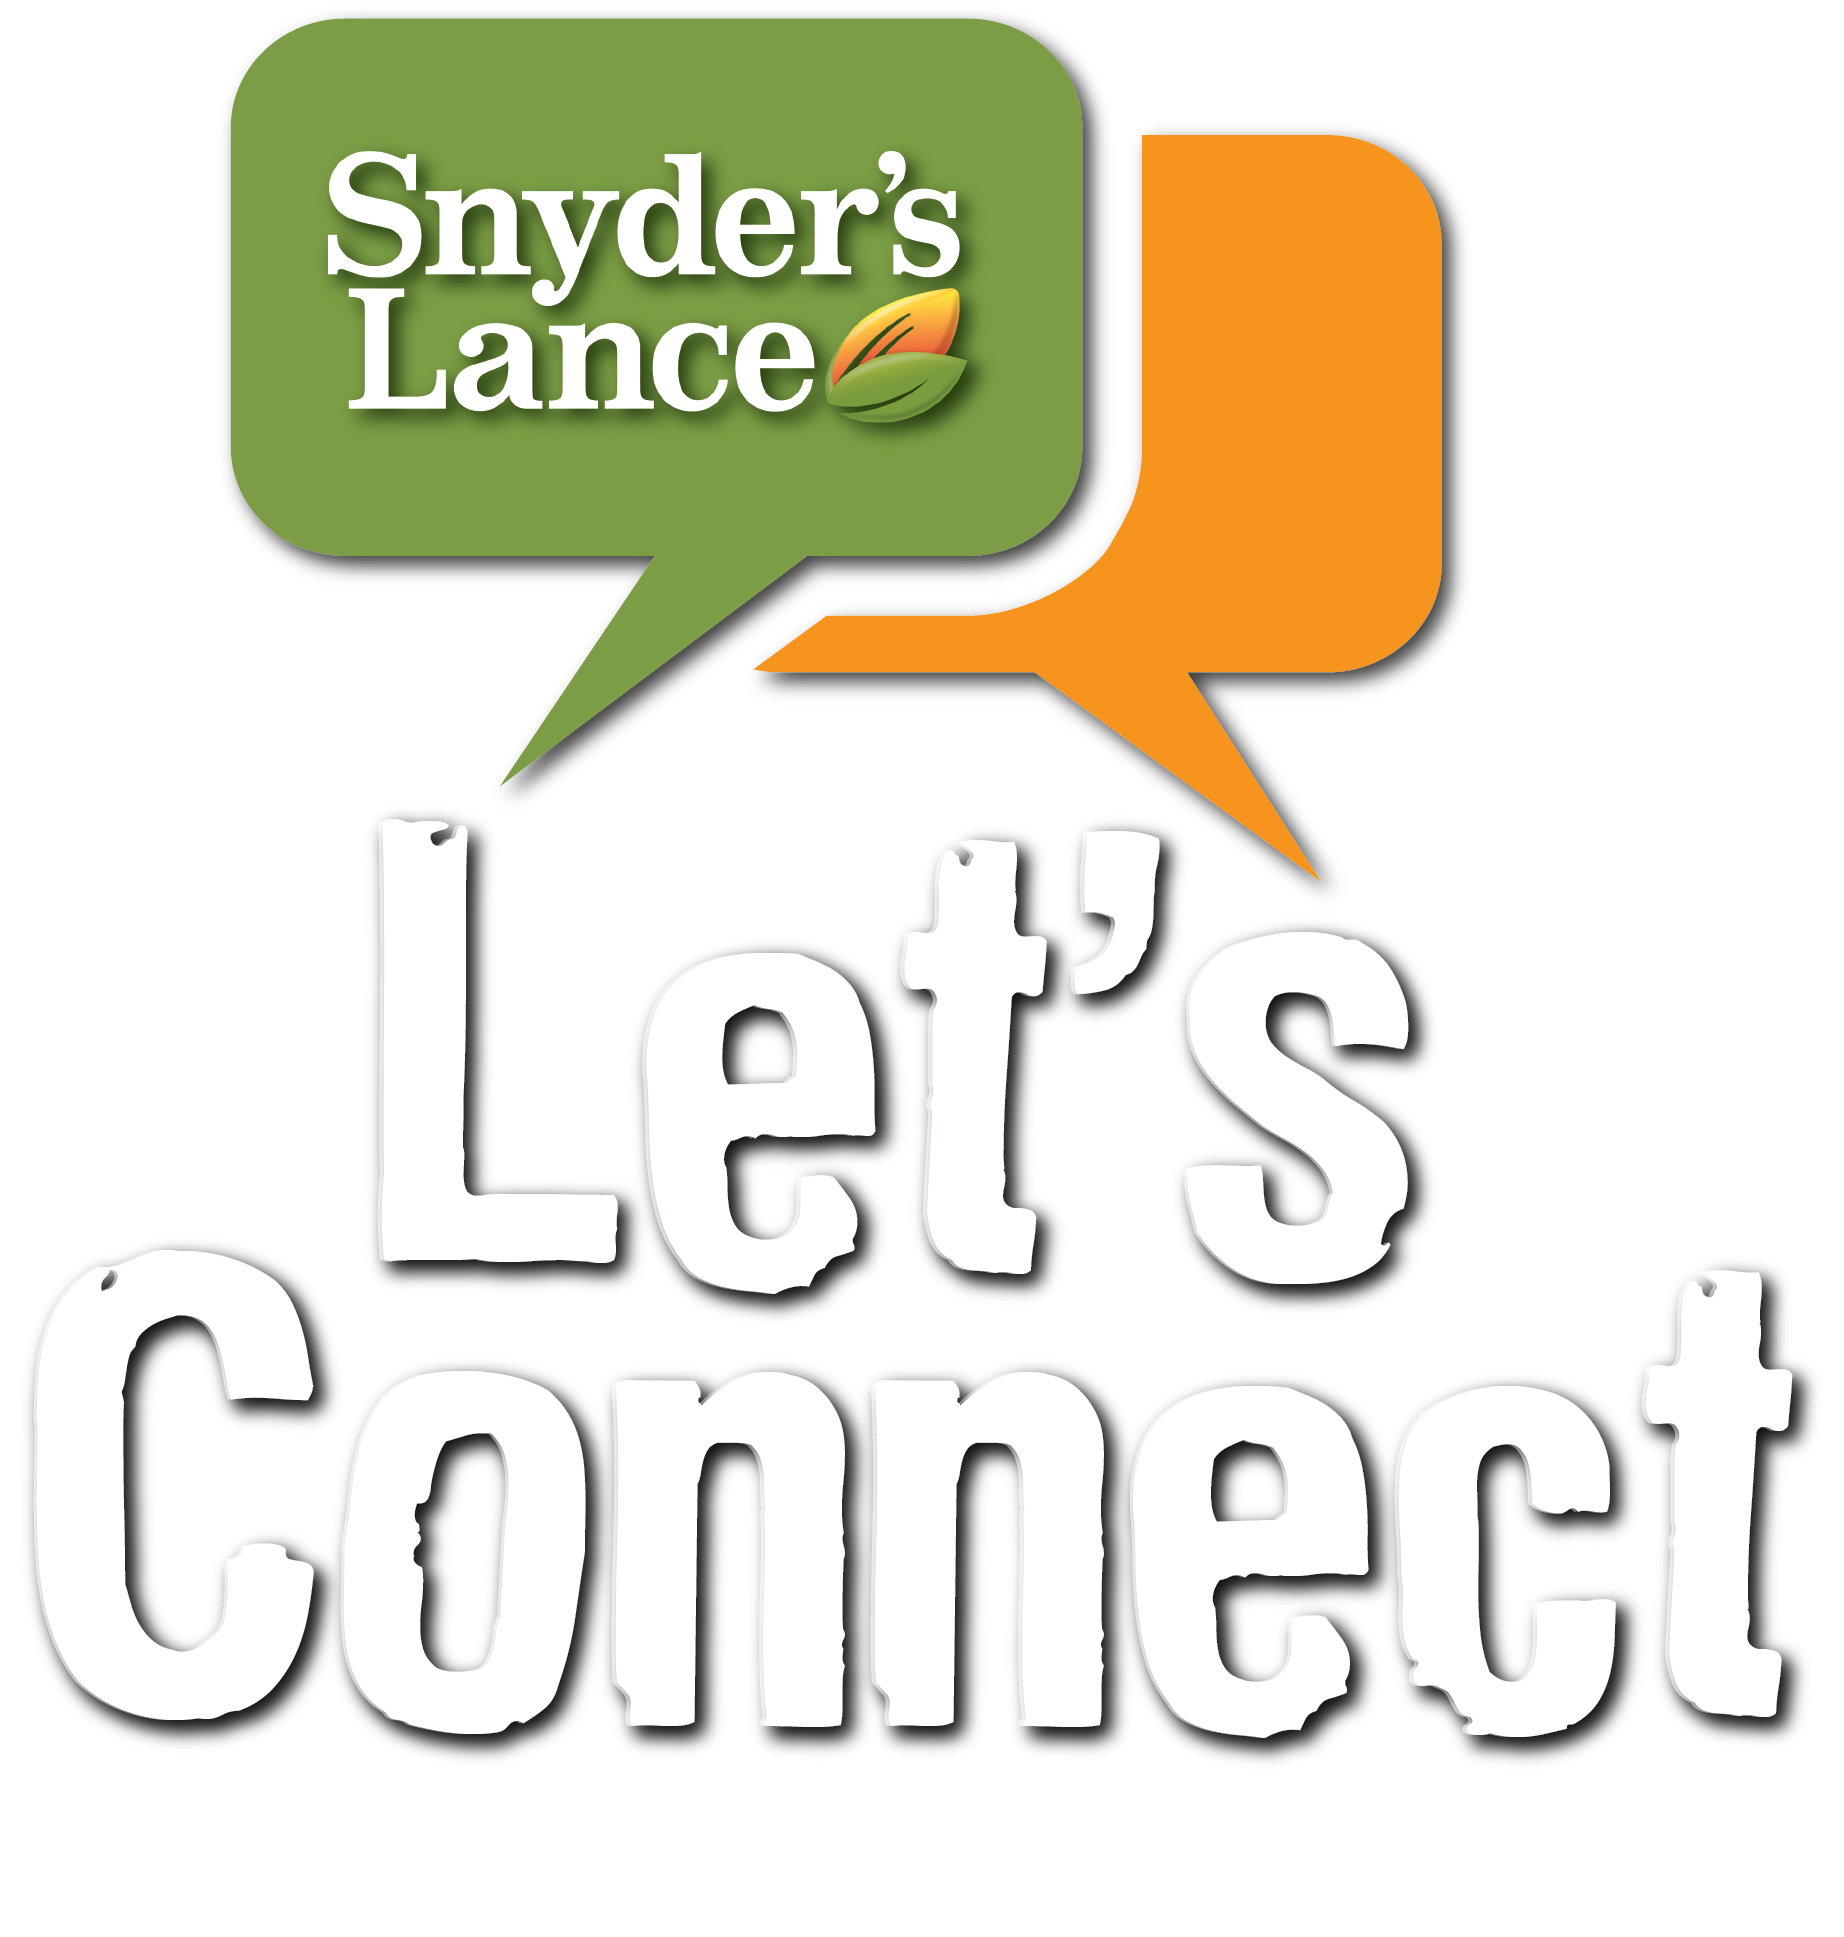 Snyder's-Lance - Let's Connect